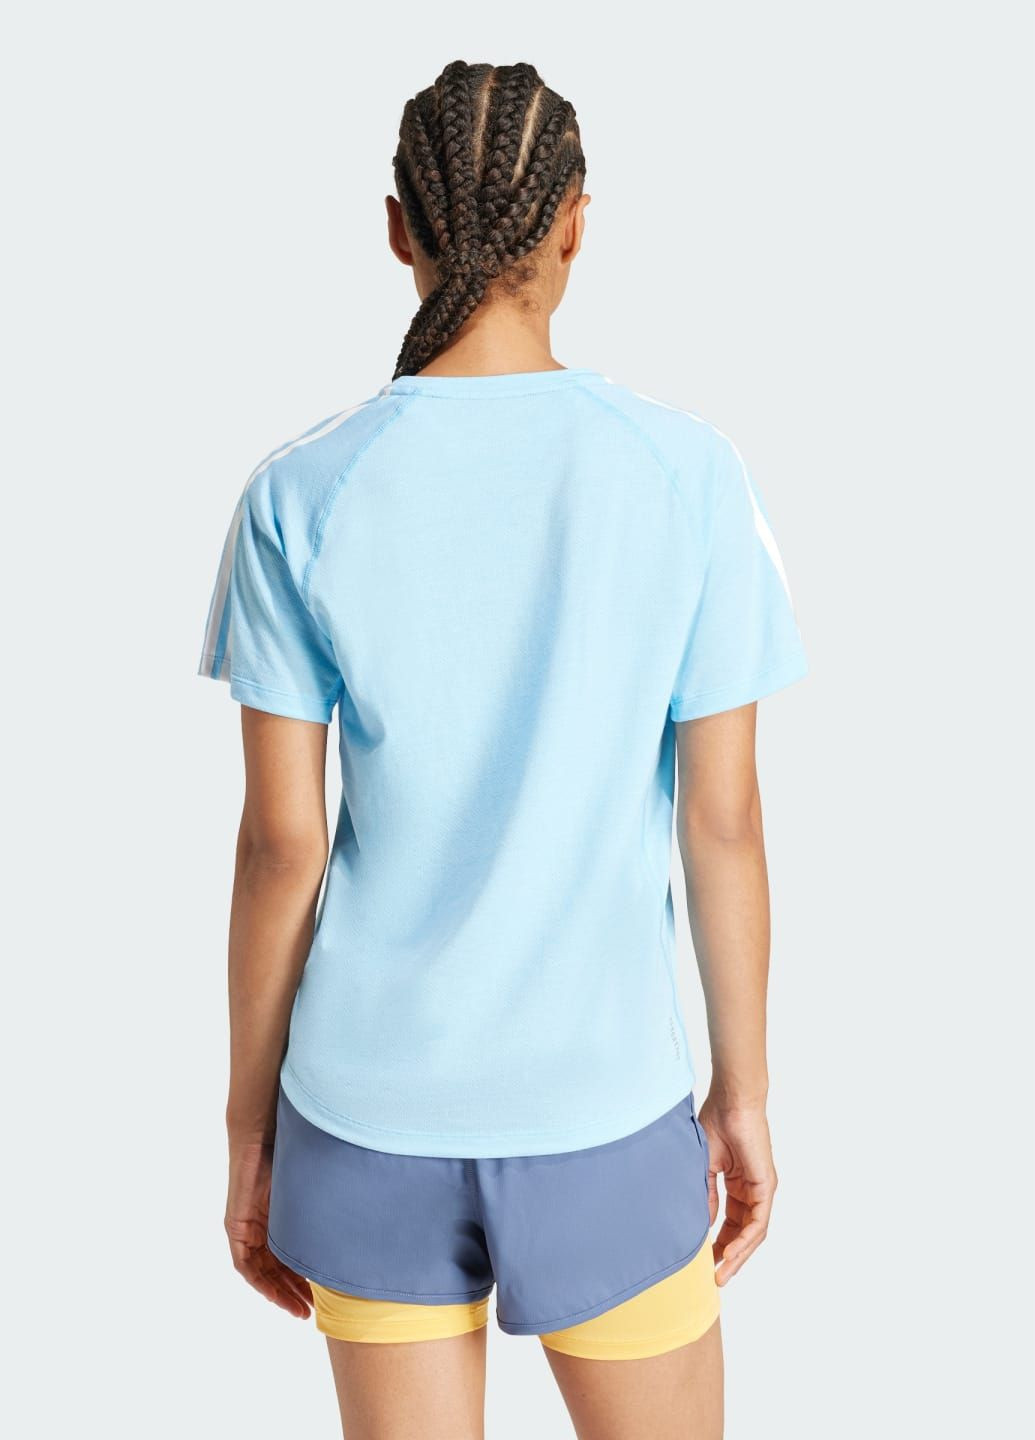 Комбинированная всесезон футболка own the run 3-stripes adidas